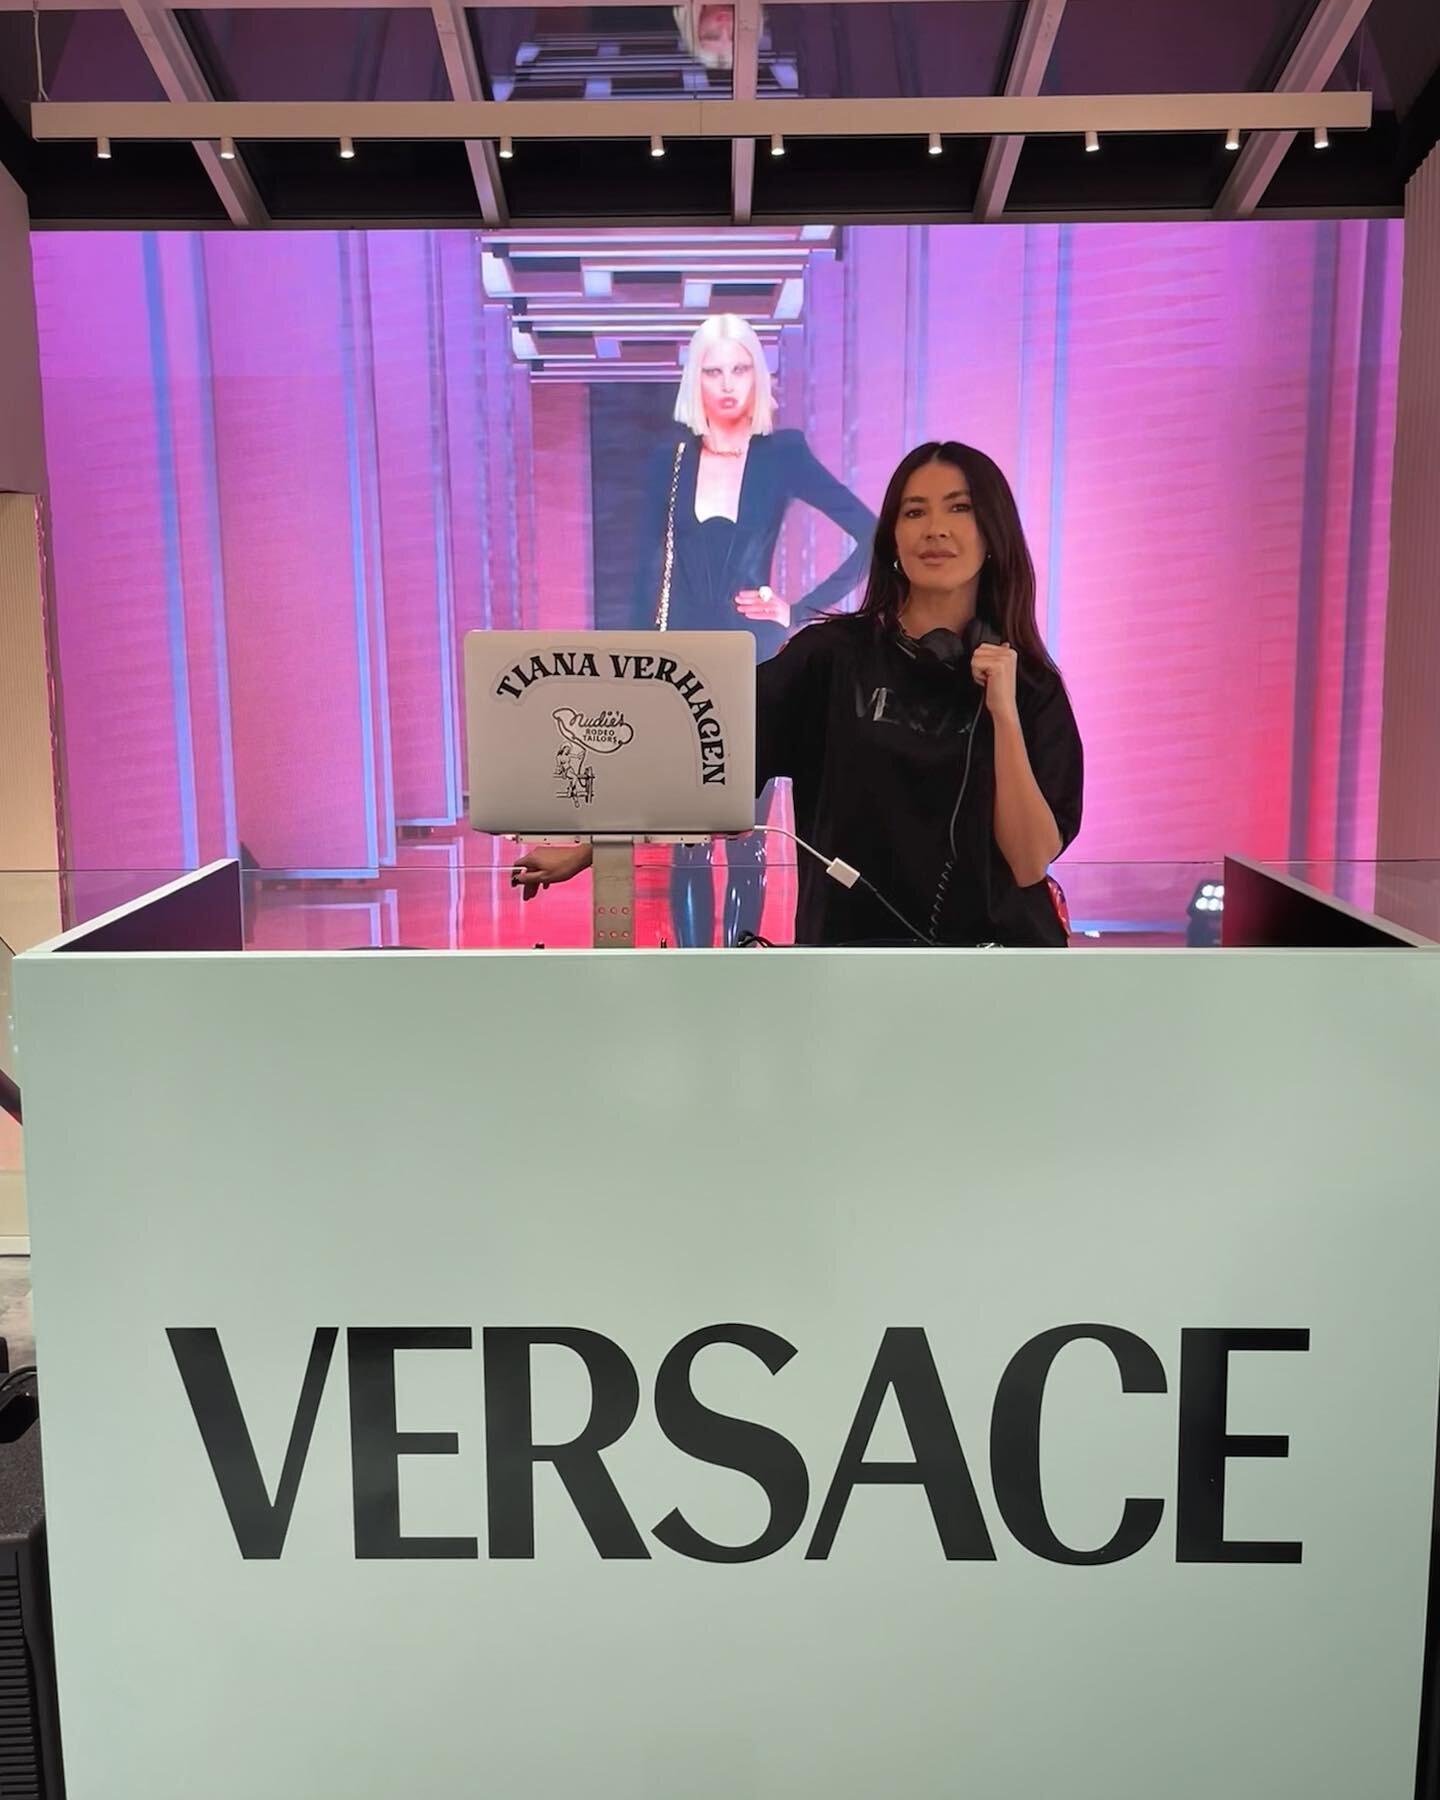 Versace Holiday in Soho with @tiana_verhagen 💚🌟💚
.
.
.
.
.
.
#nycdj #djagency #versaceholiday #versace #dj #femaledj